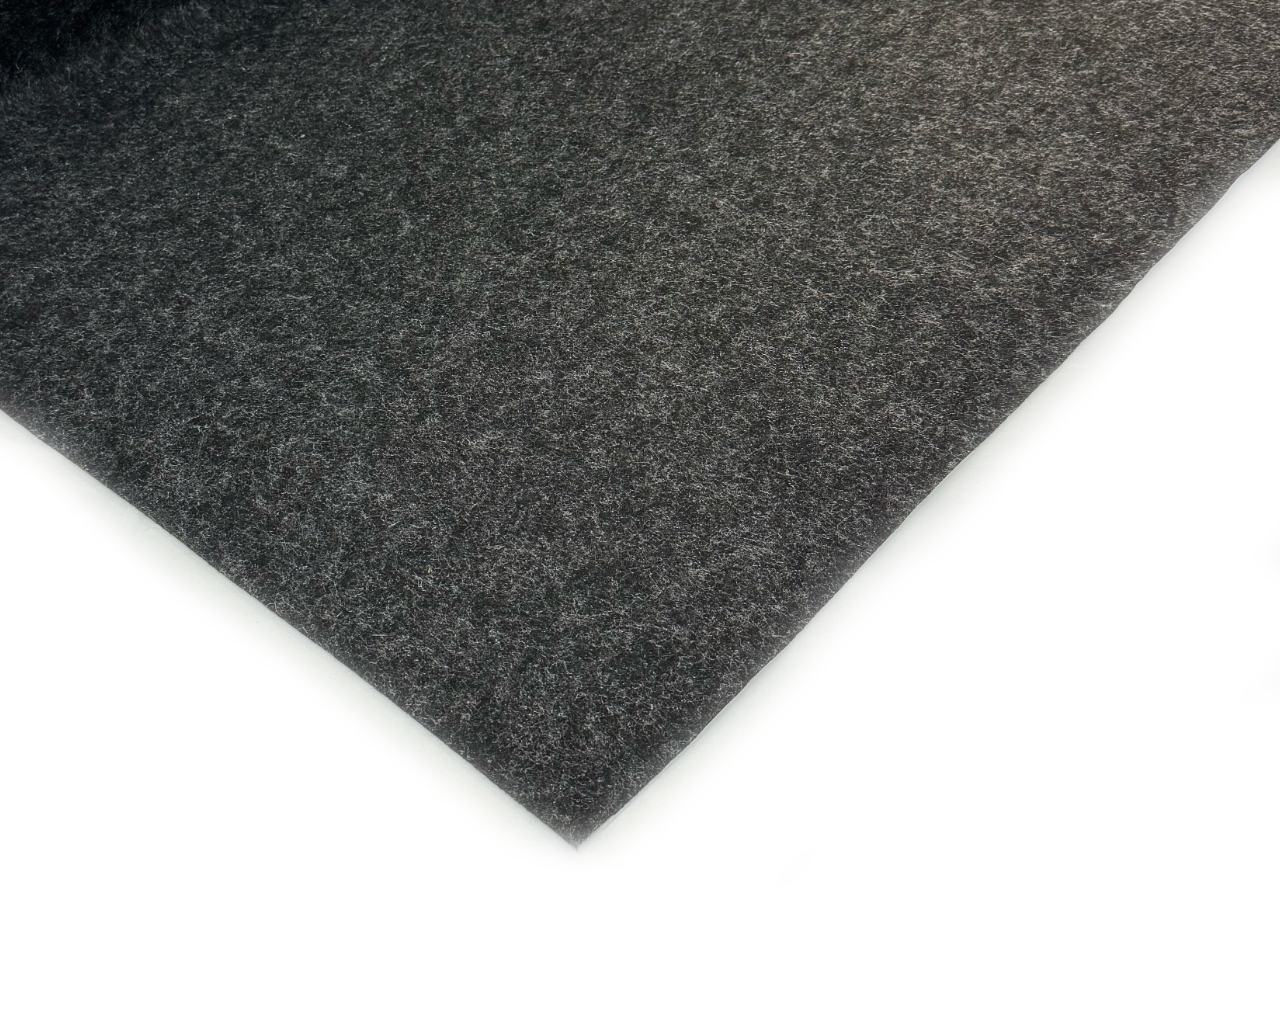 STP Acoustic Carpet anthrazit 1,40x1m - selbstklebender Bezugsstoff